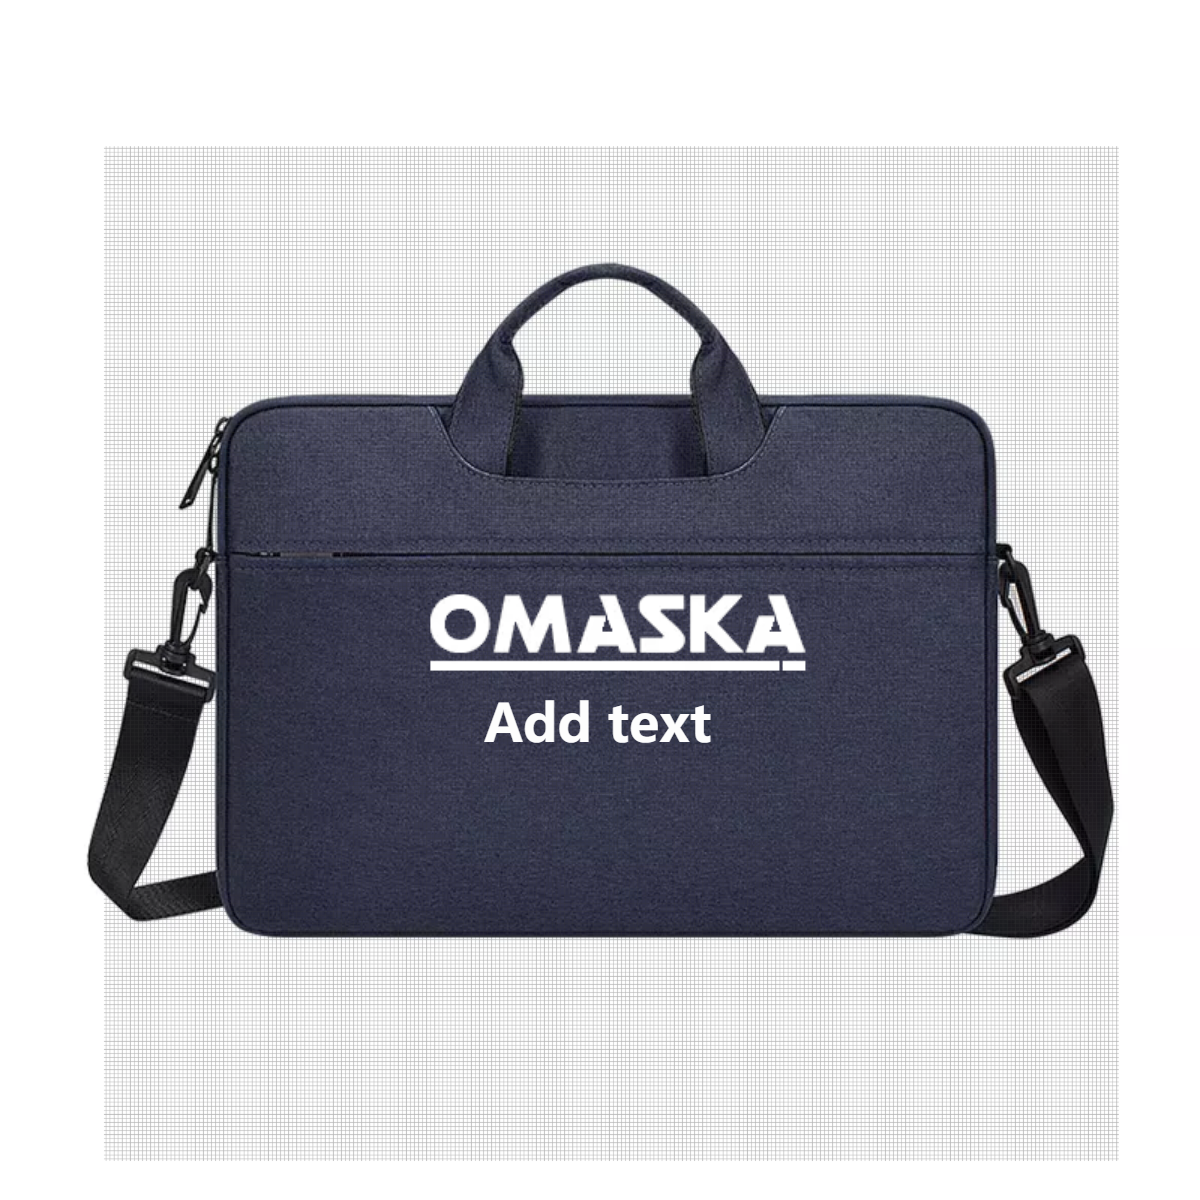 OMASKA Custom Waterproof 15.6 Inch Laptop Computer and Tablet Shoulder Bag Carrying Case Business Laptop Bag